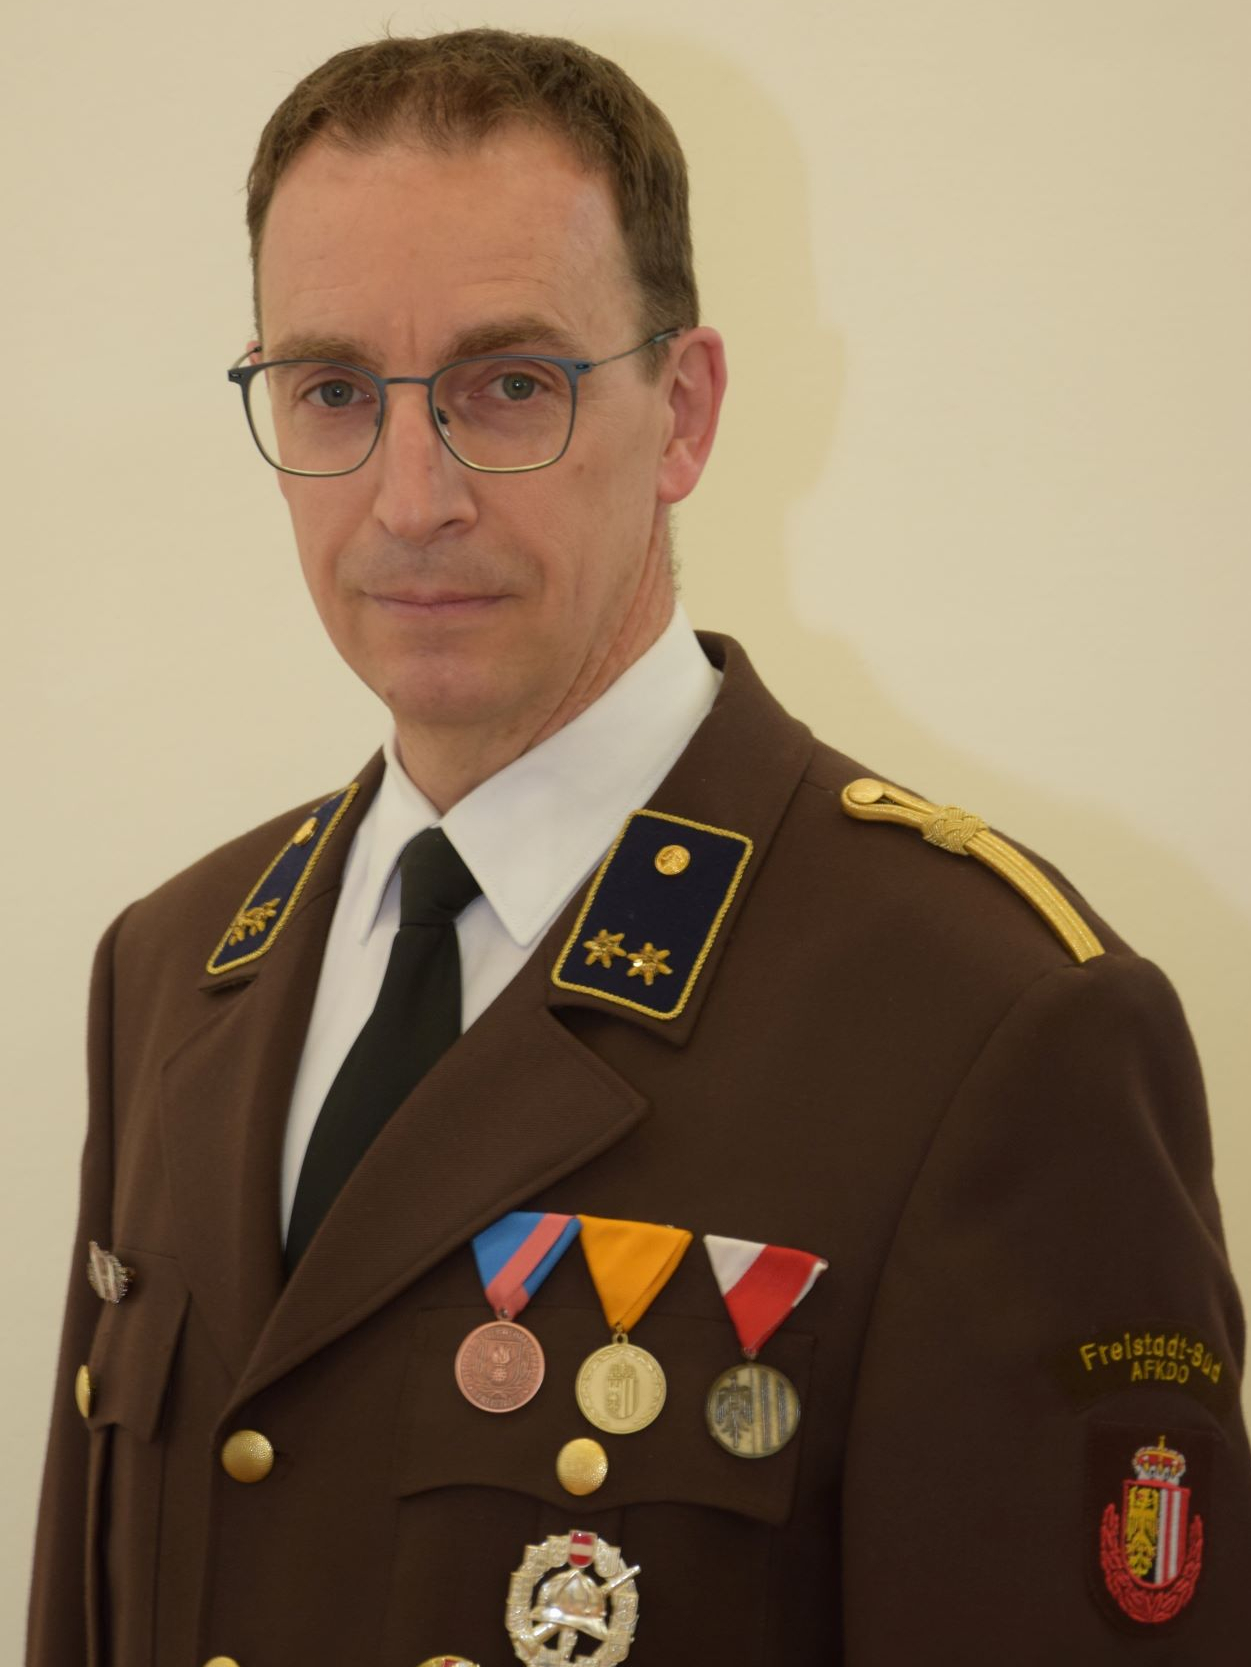 Roland Freudenthaler